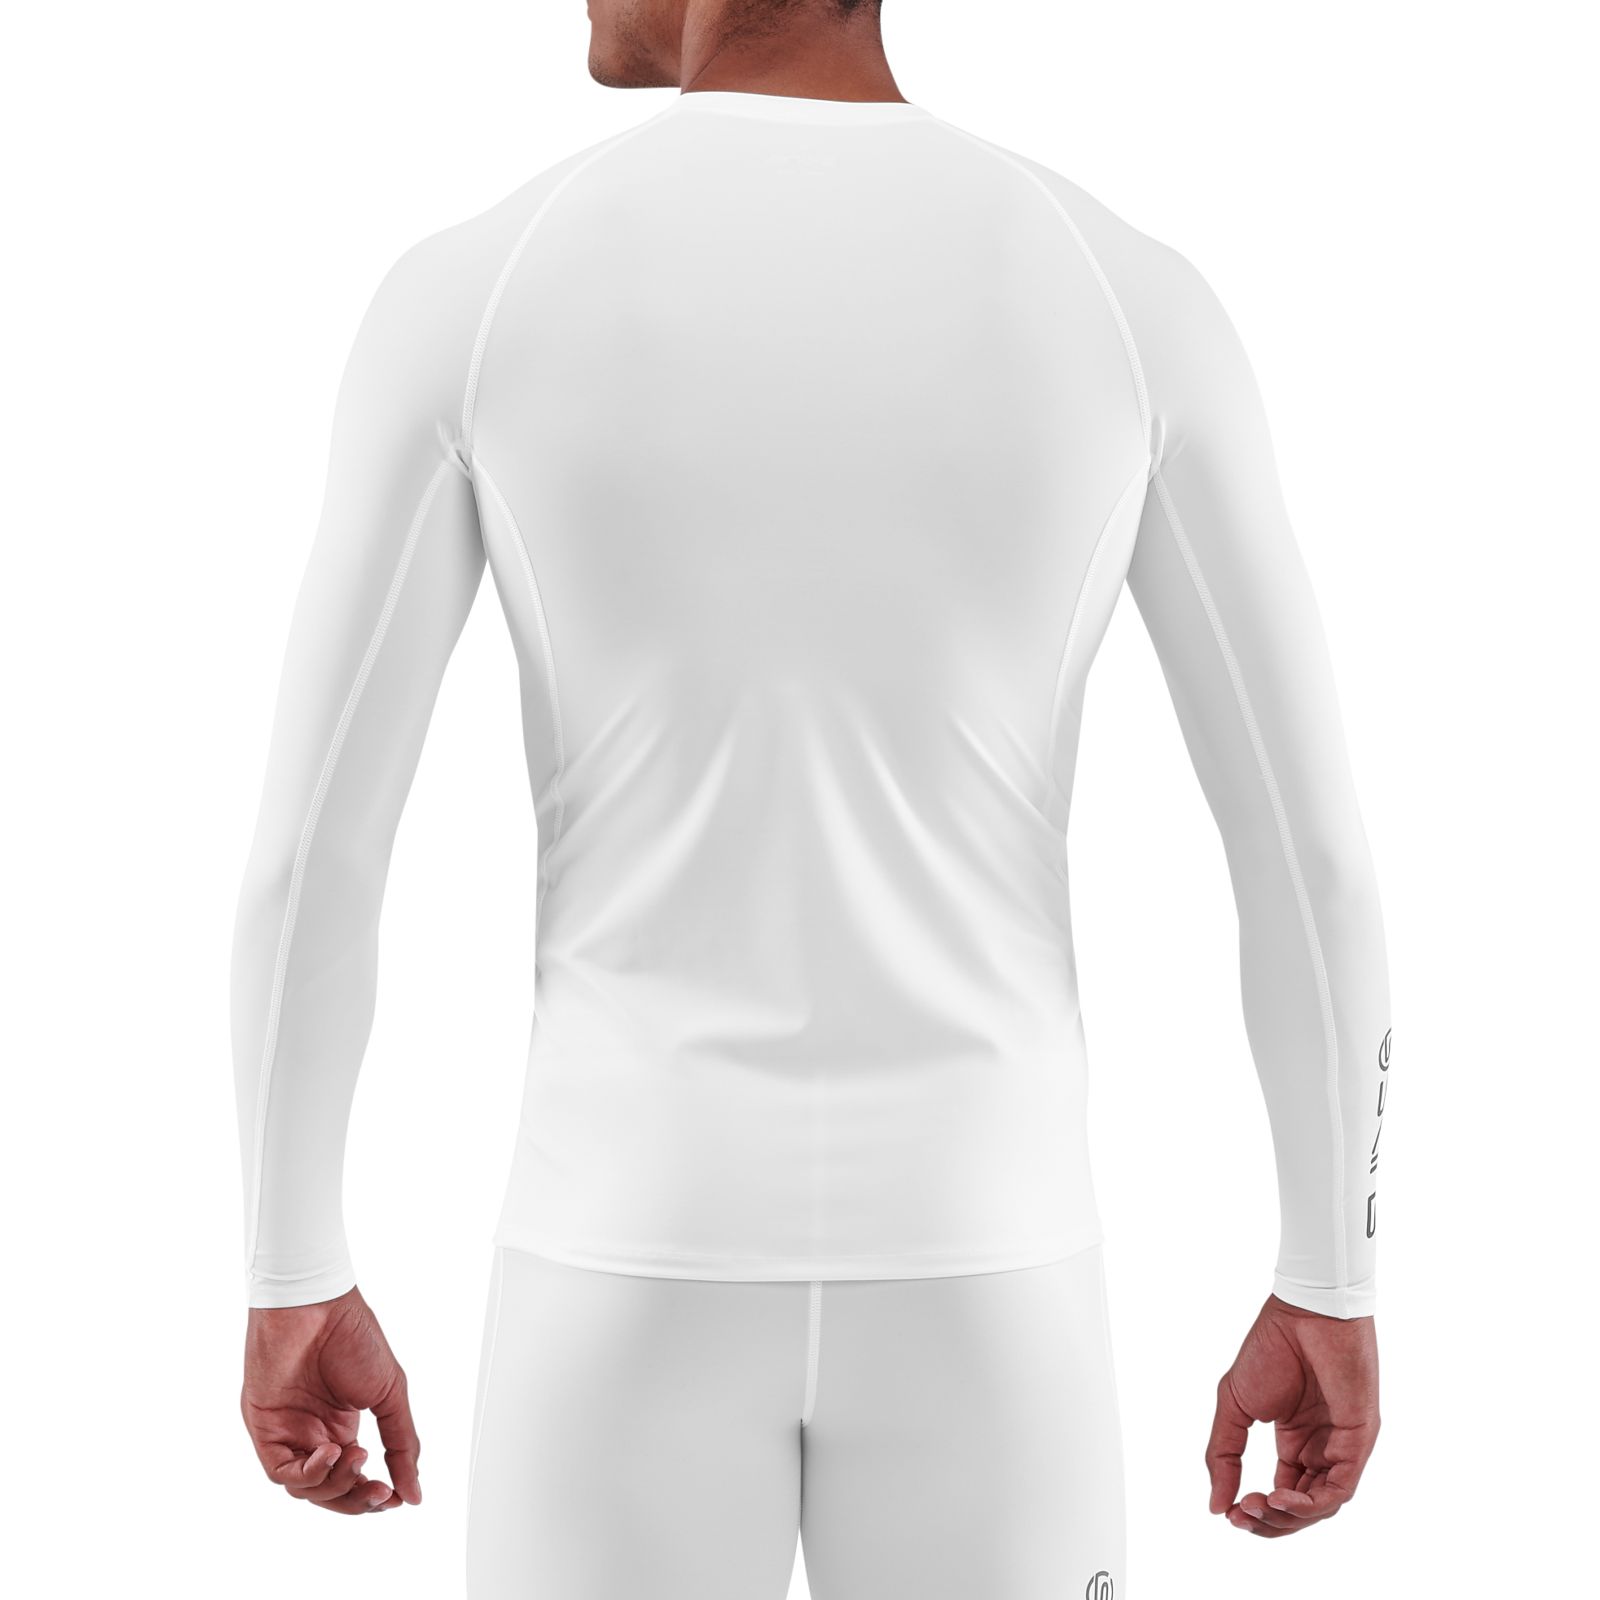 Skins a200 Long Sleeve Compression Top Manica Lunga Camicia Funzione Sport Fitness Shirt 